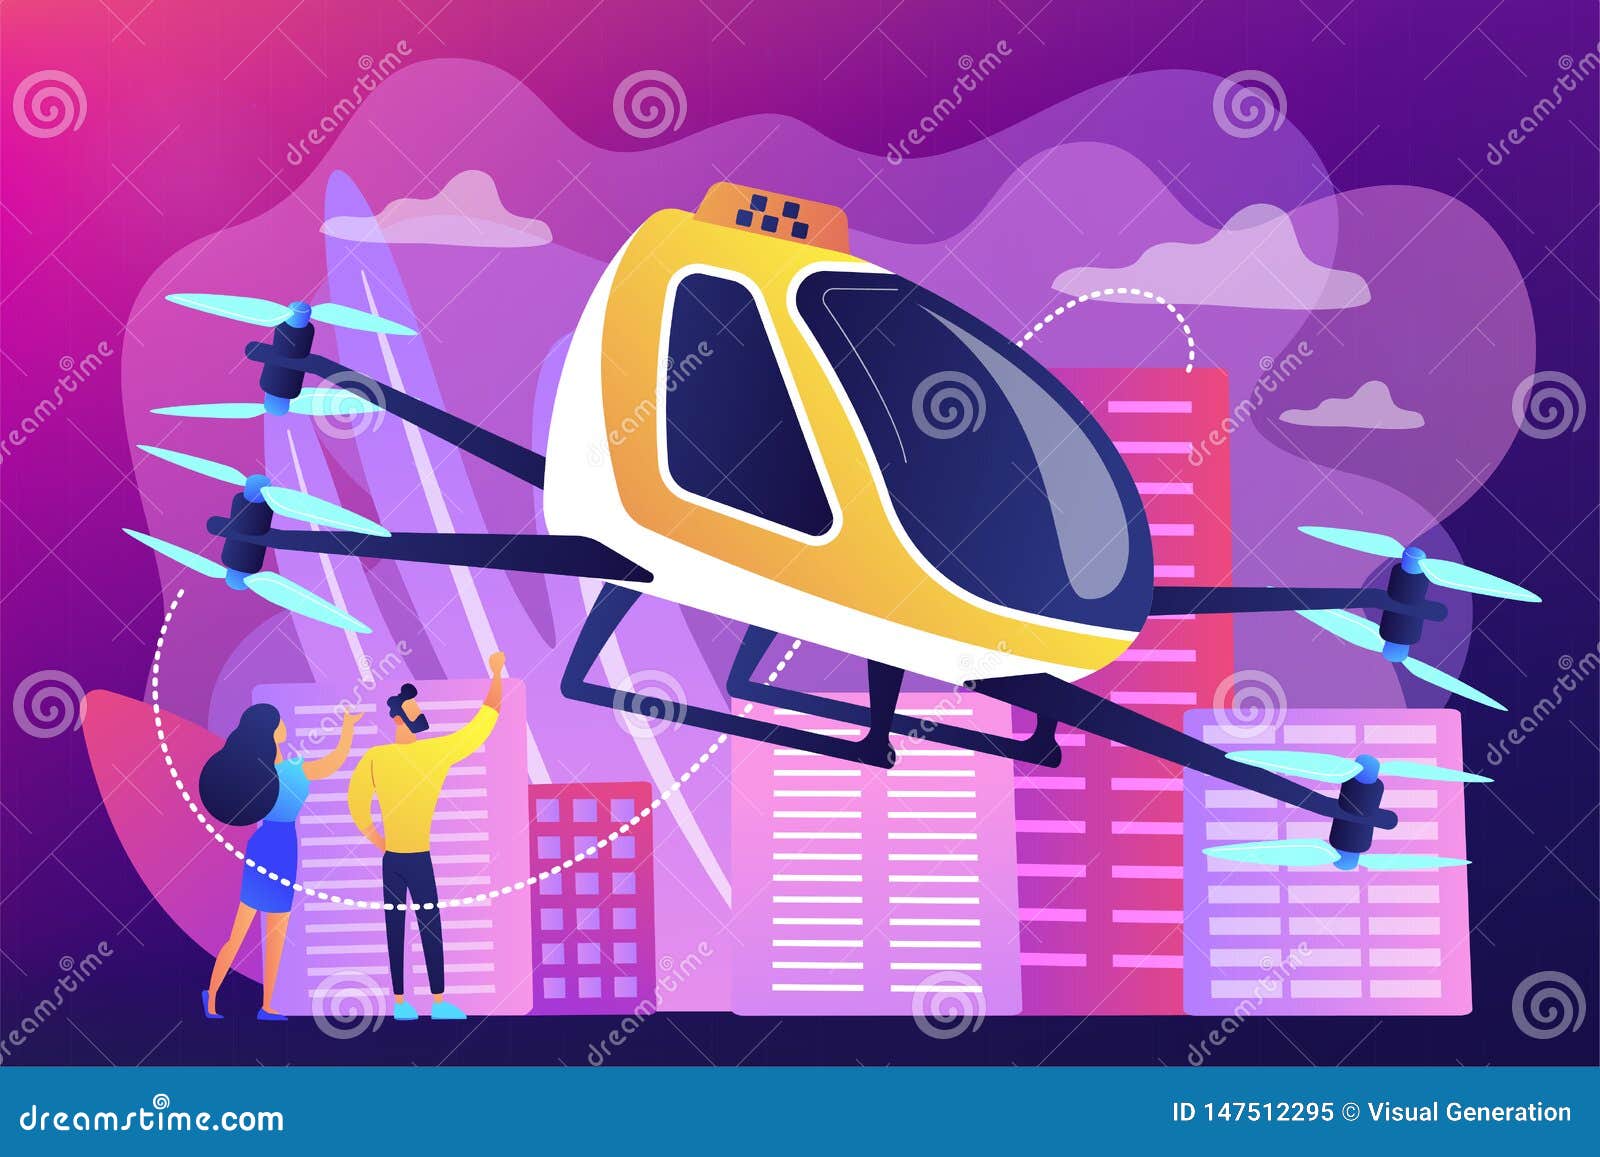 aerial taxi service concept  .